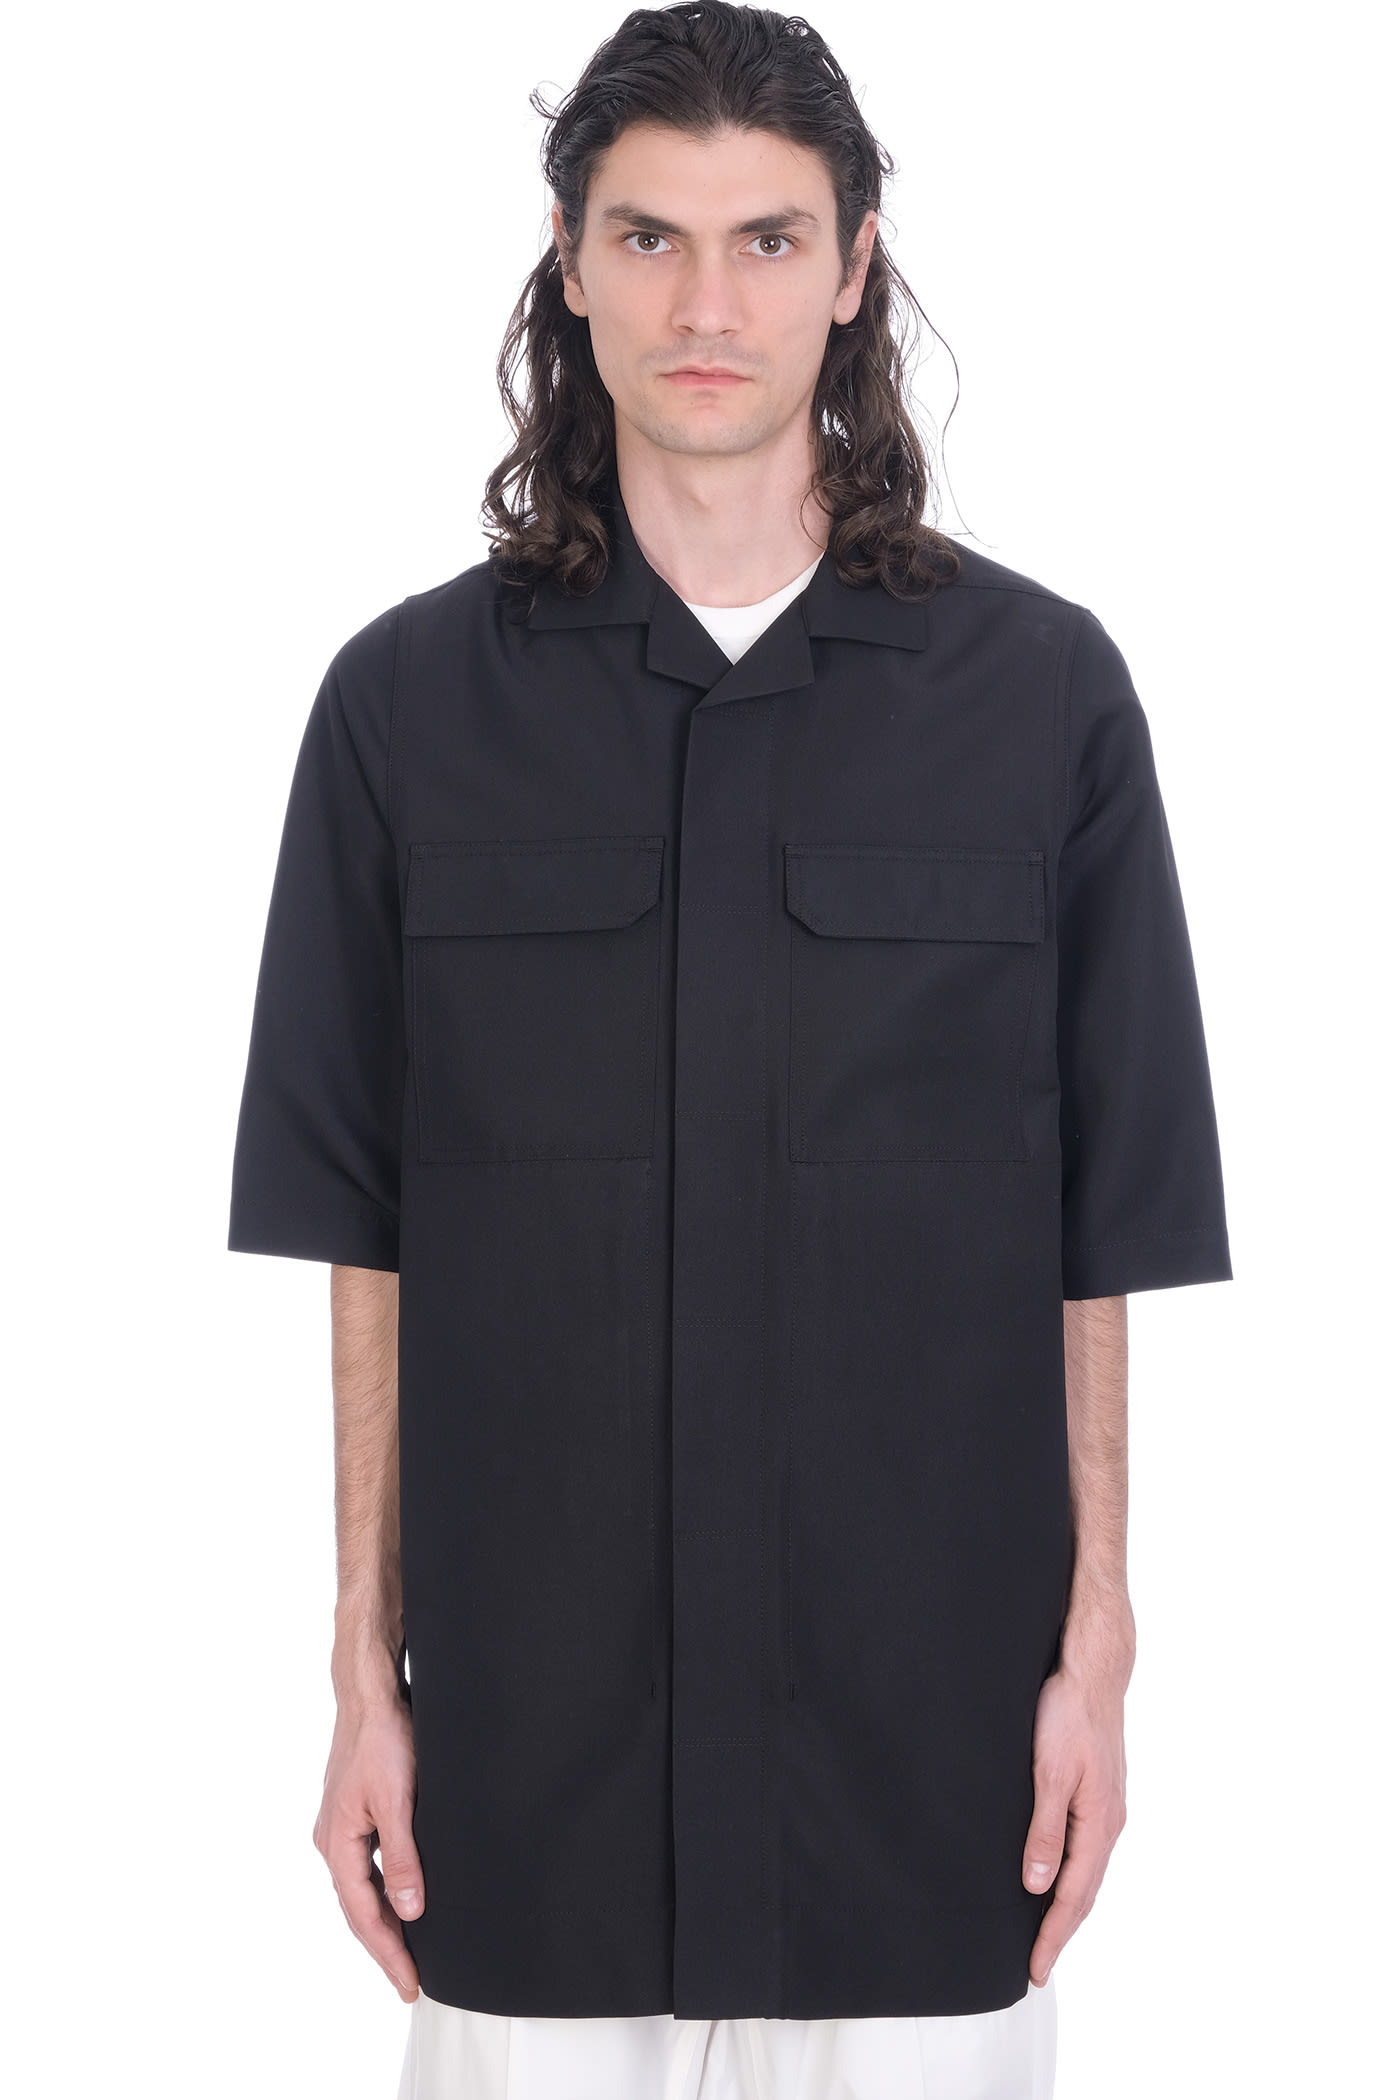 Rick Owens Magnum Shirt In Black Polyester